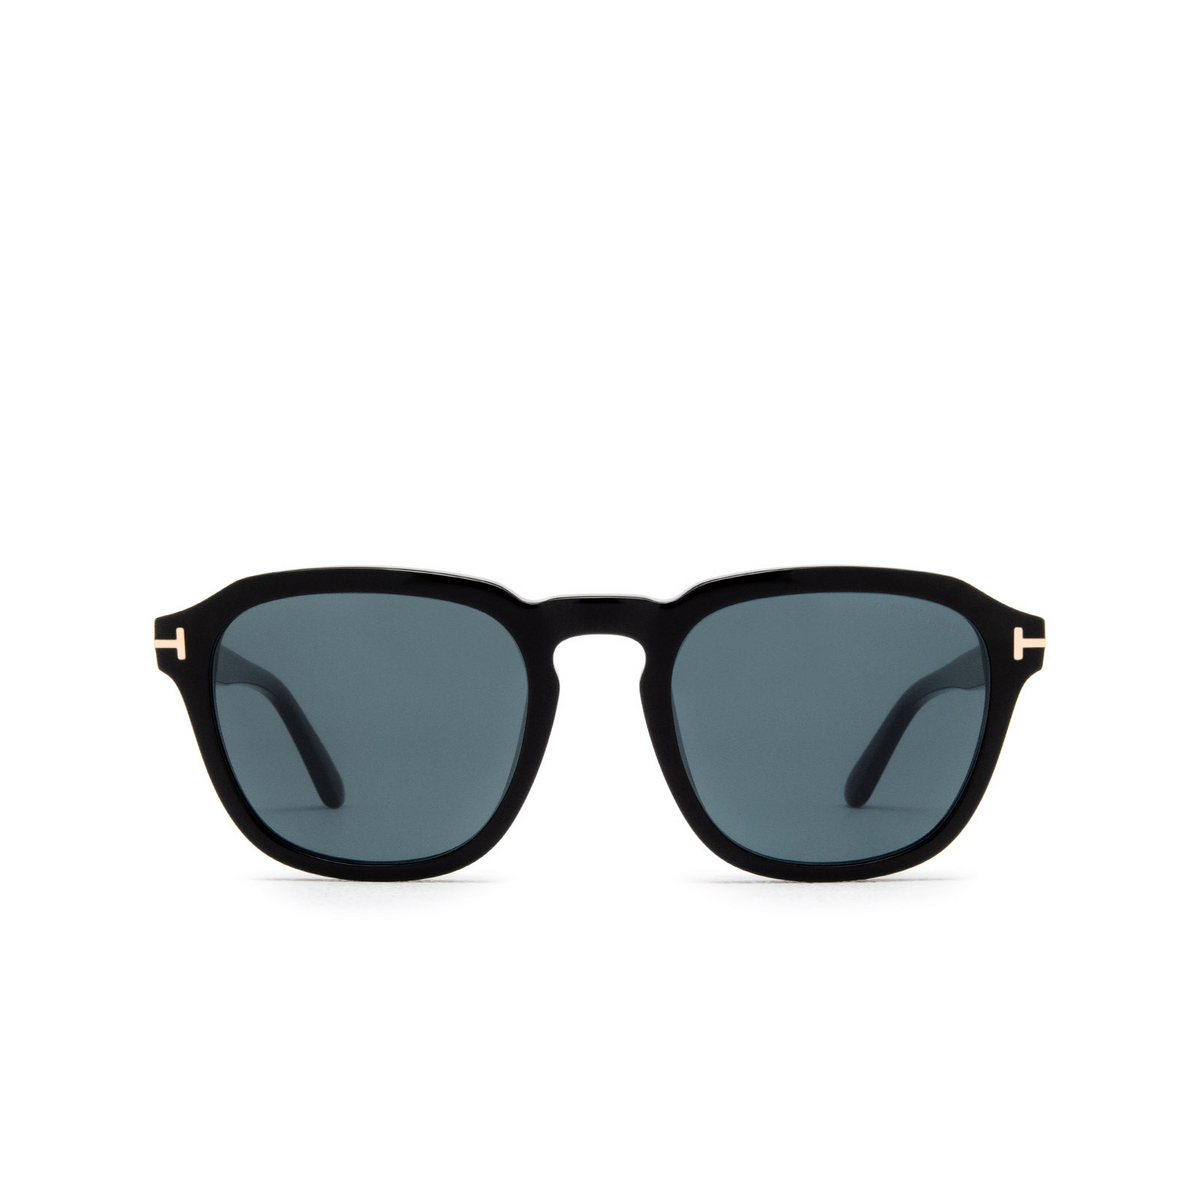 Tom Ford AVERY Sunglasses 01V Black - front view